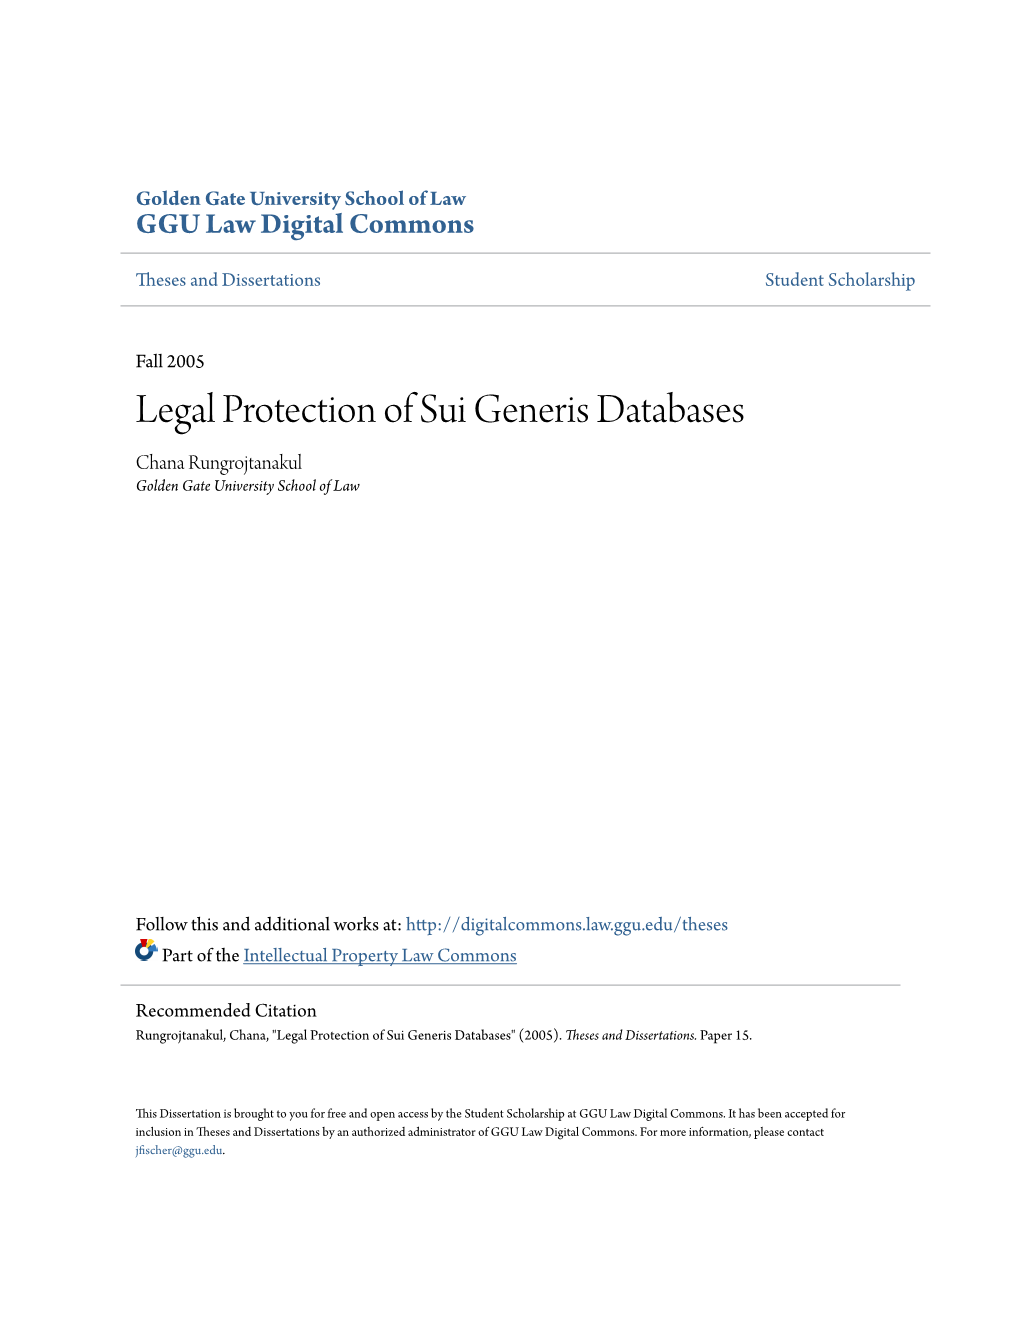 Legal Protection of Sui Generis Databases Chana Rungrojtanakul Golden Gate University School of Law